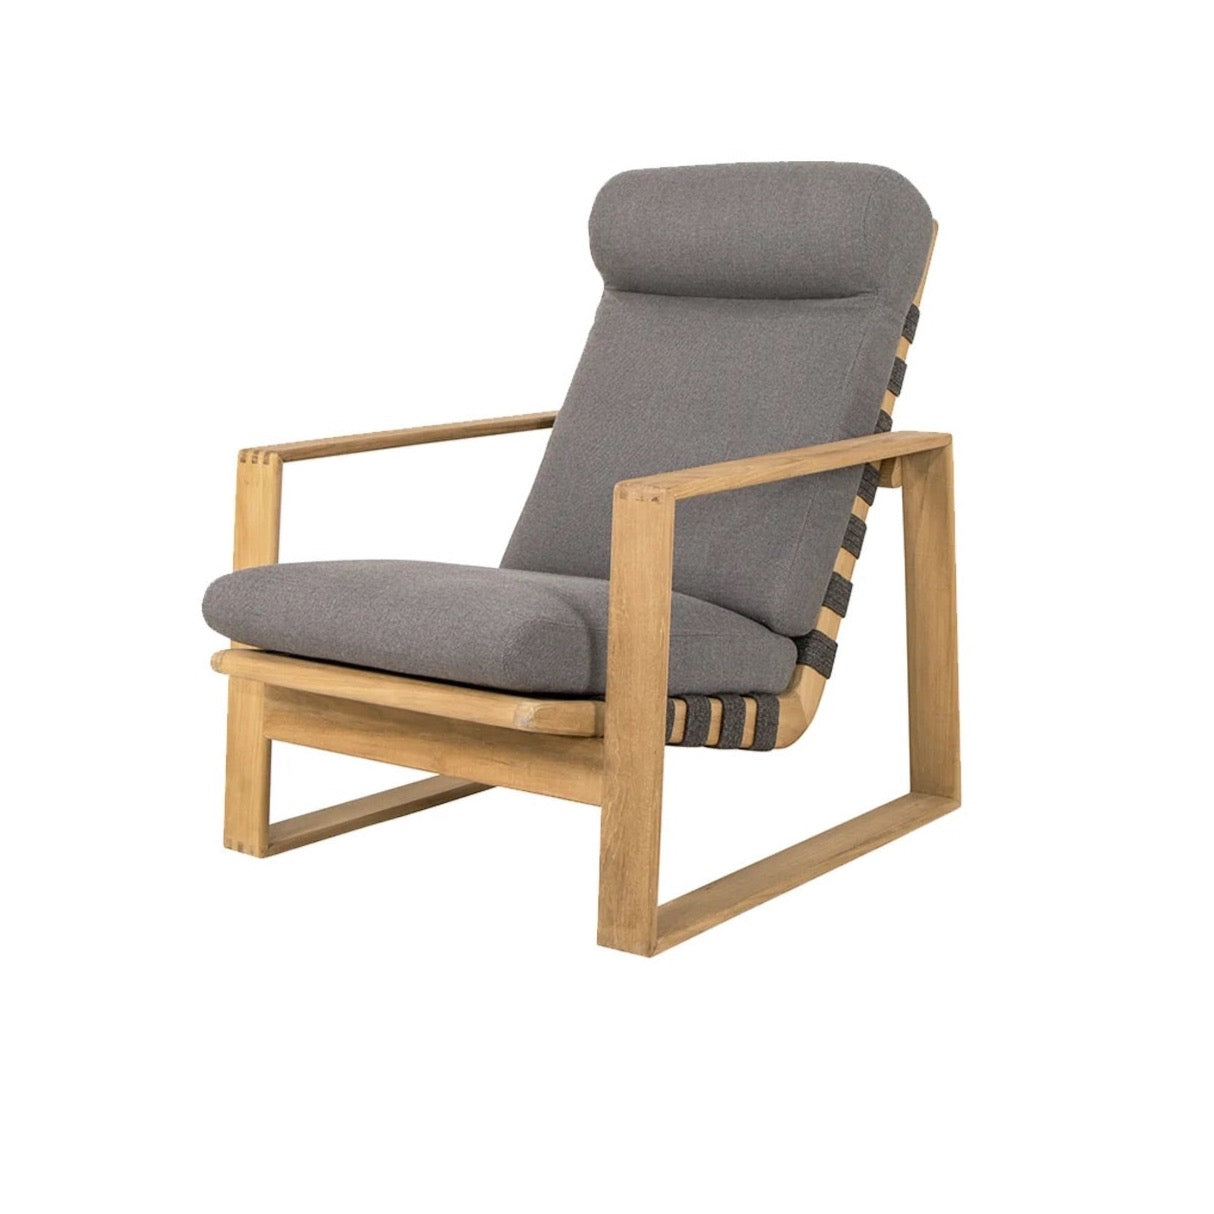 Cane-Line Endless soft highback chair